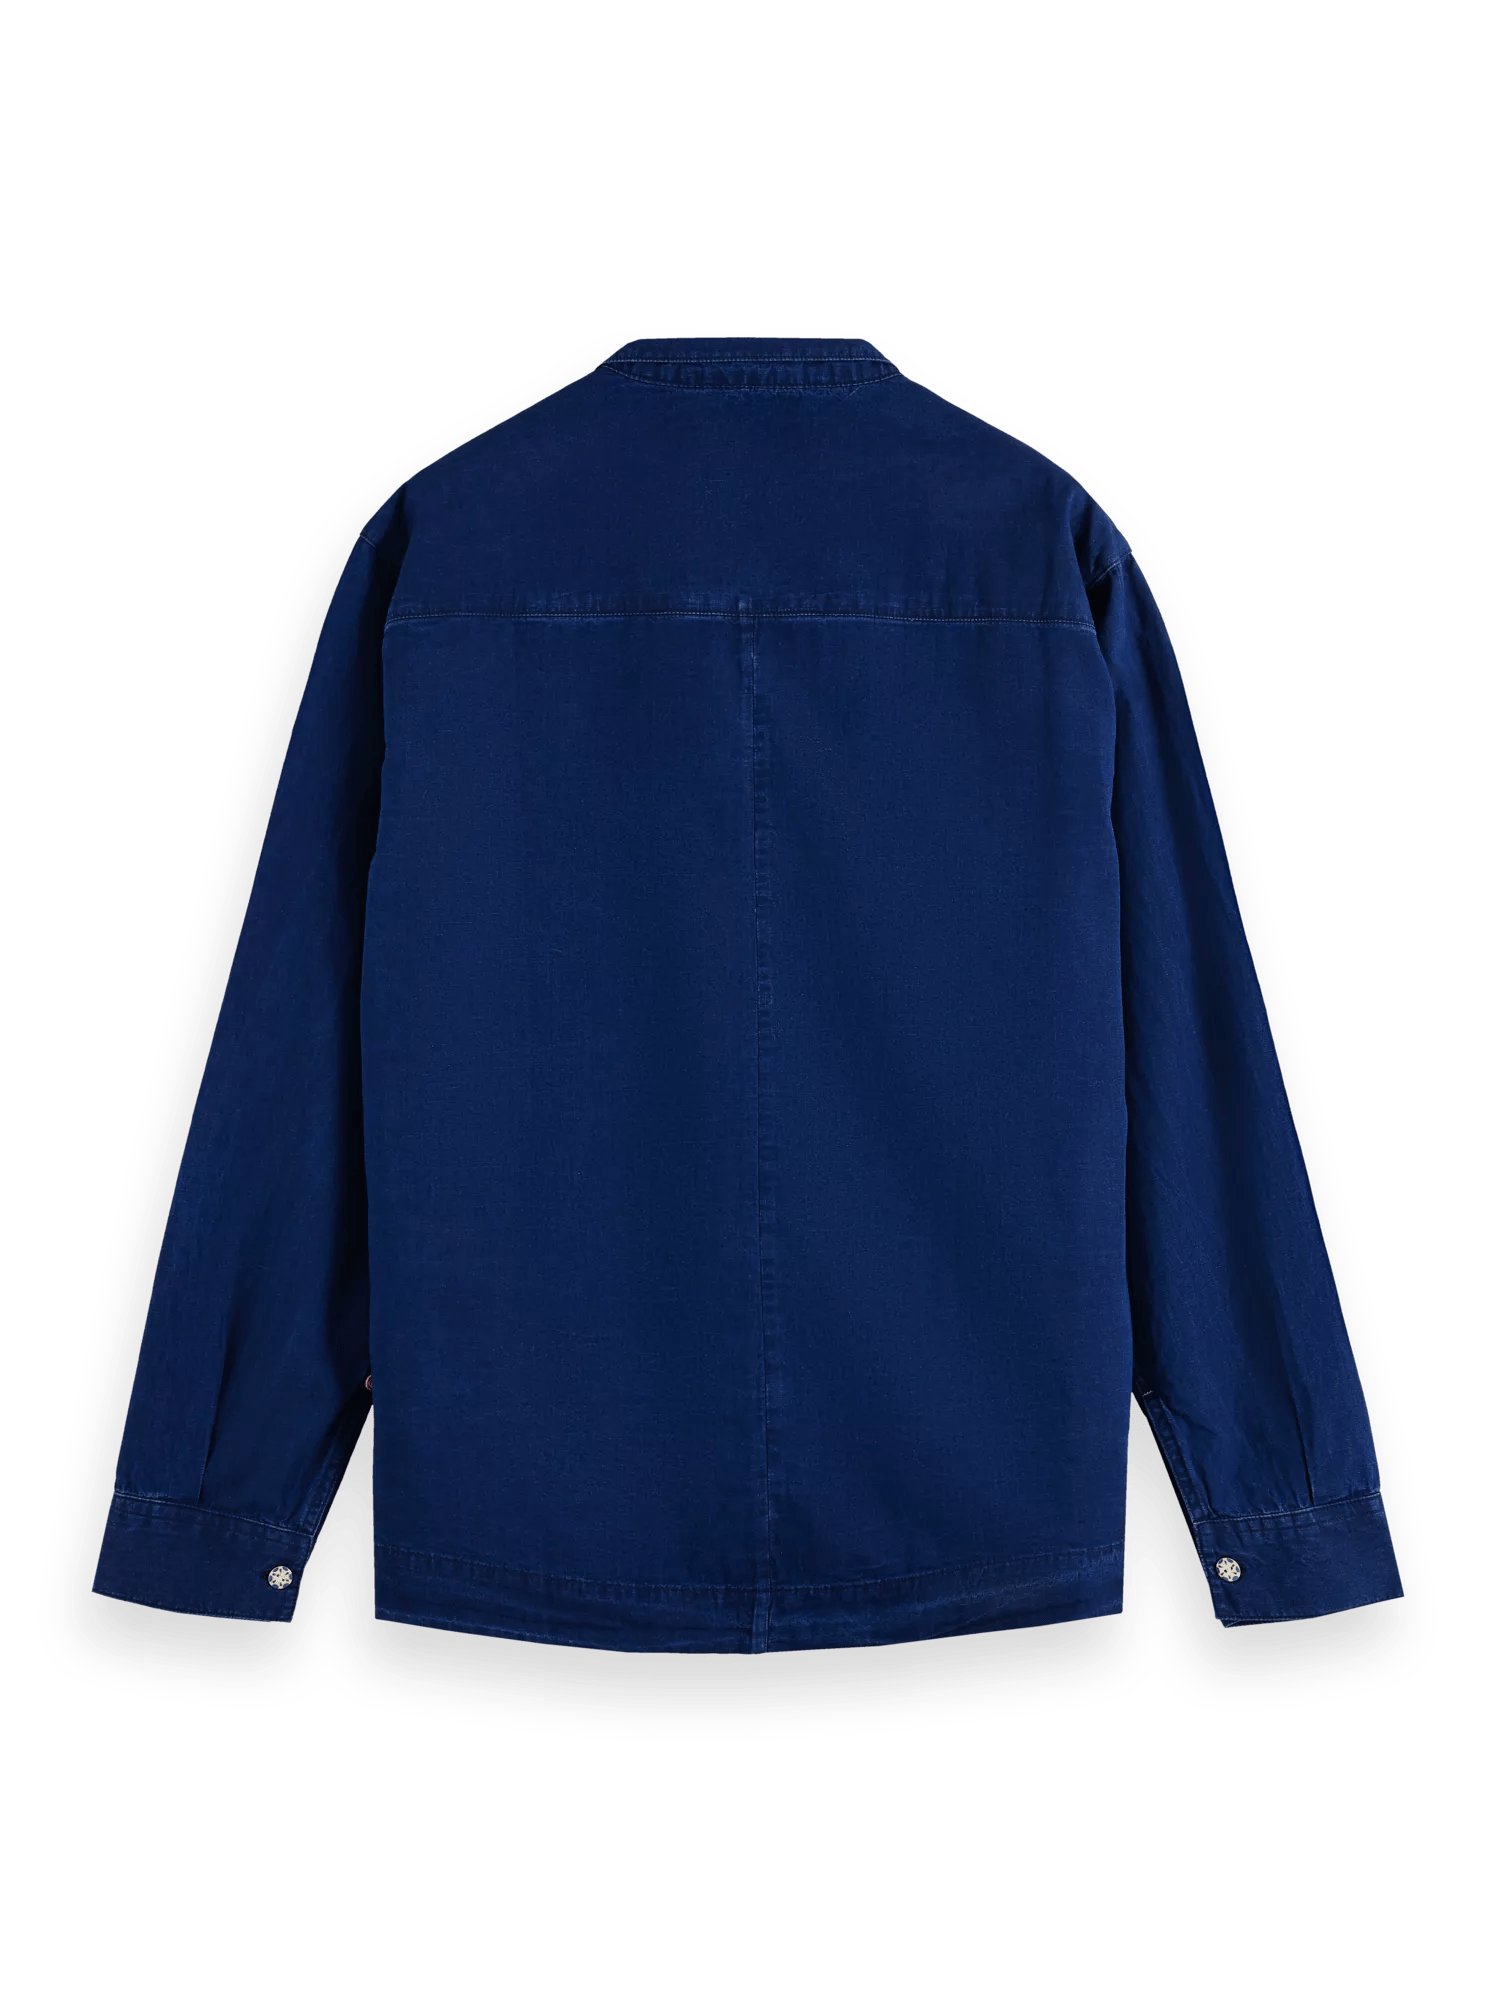 Scotch & Soda Indigo linen Japanese inspired shirt jacket BCK